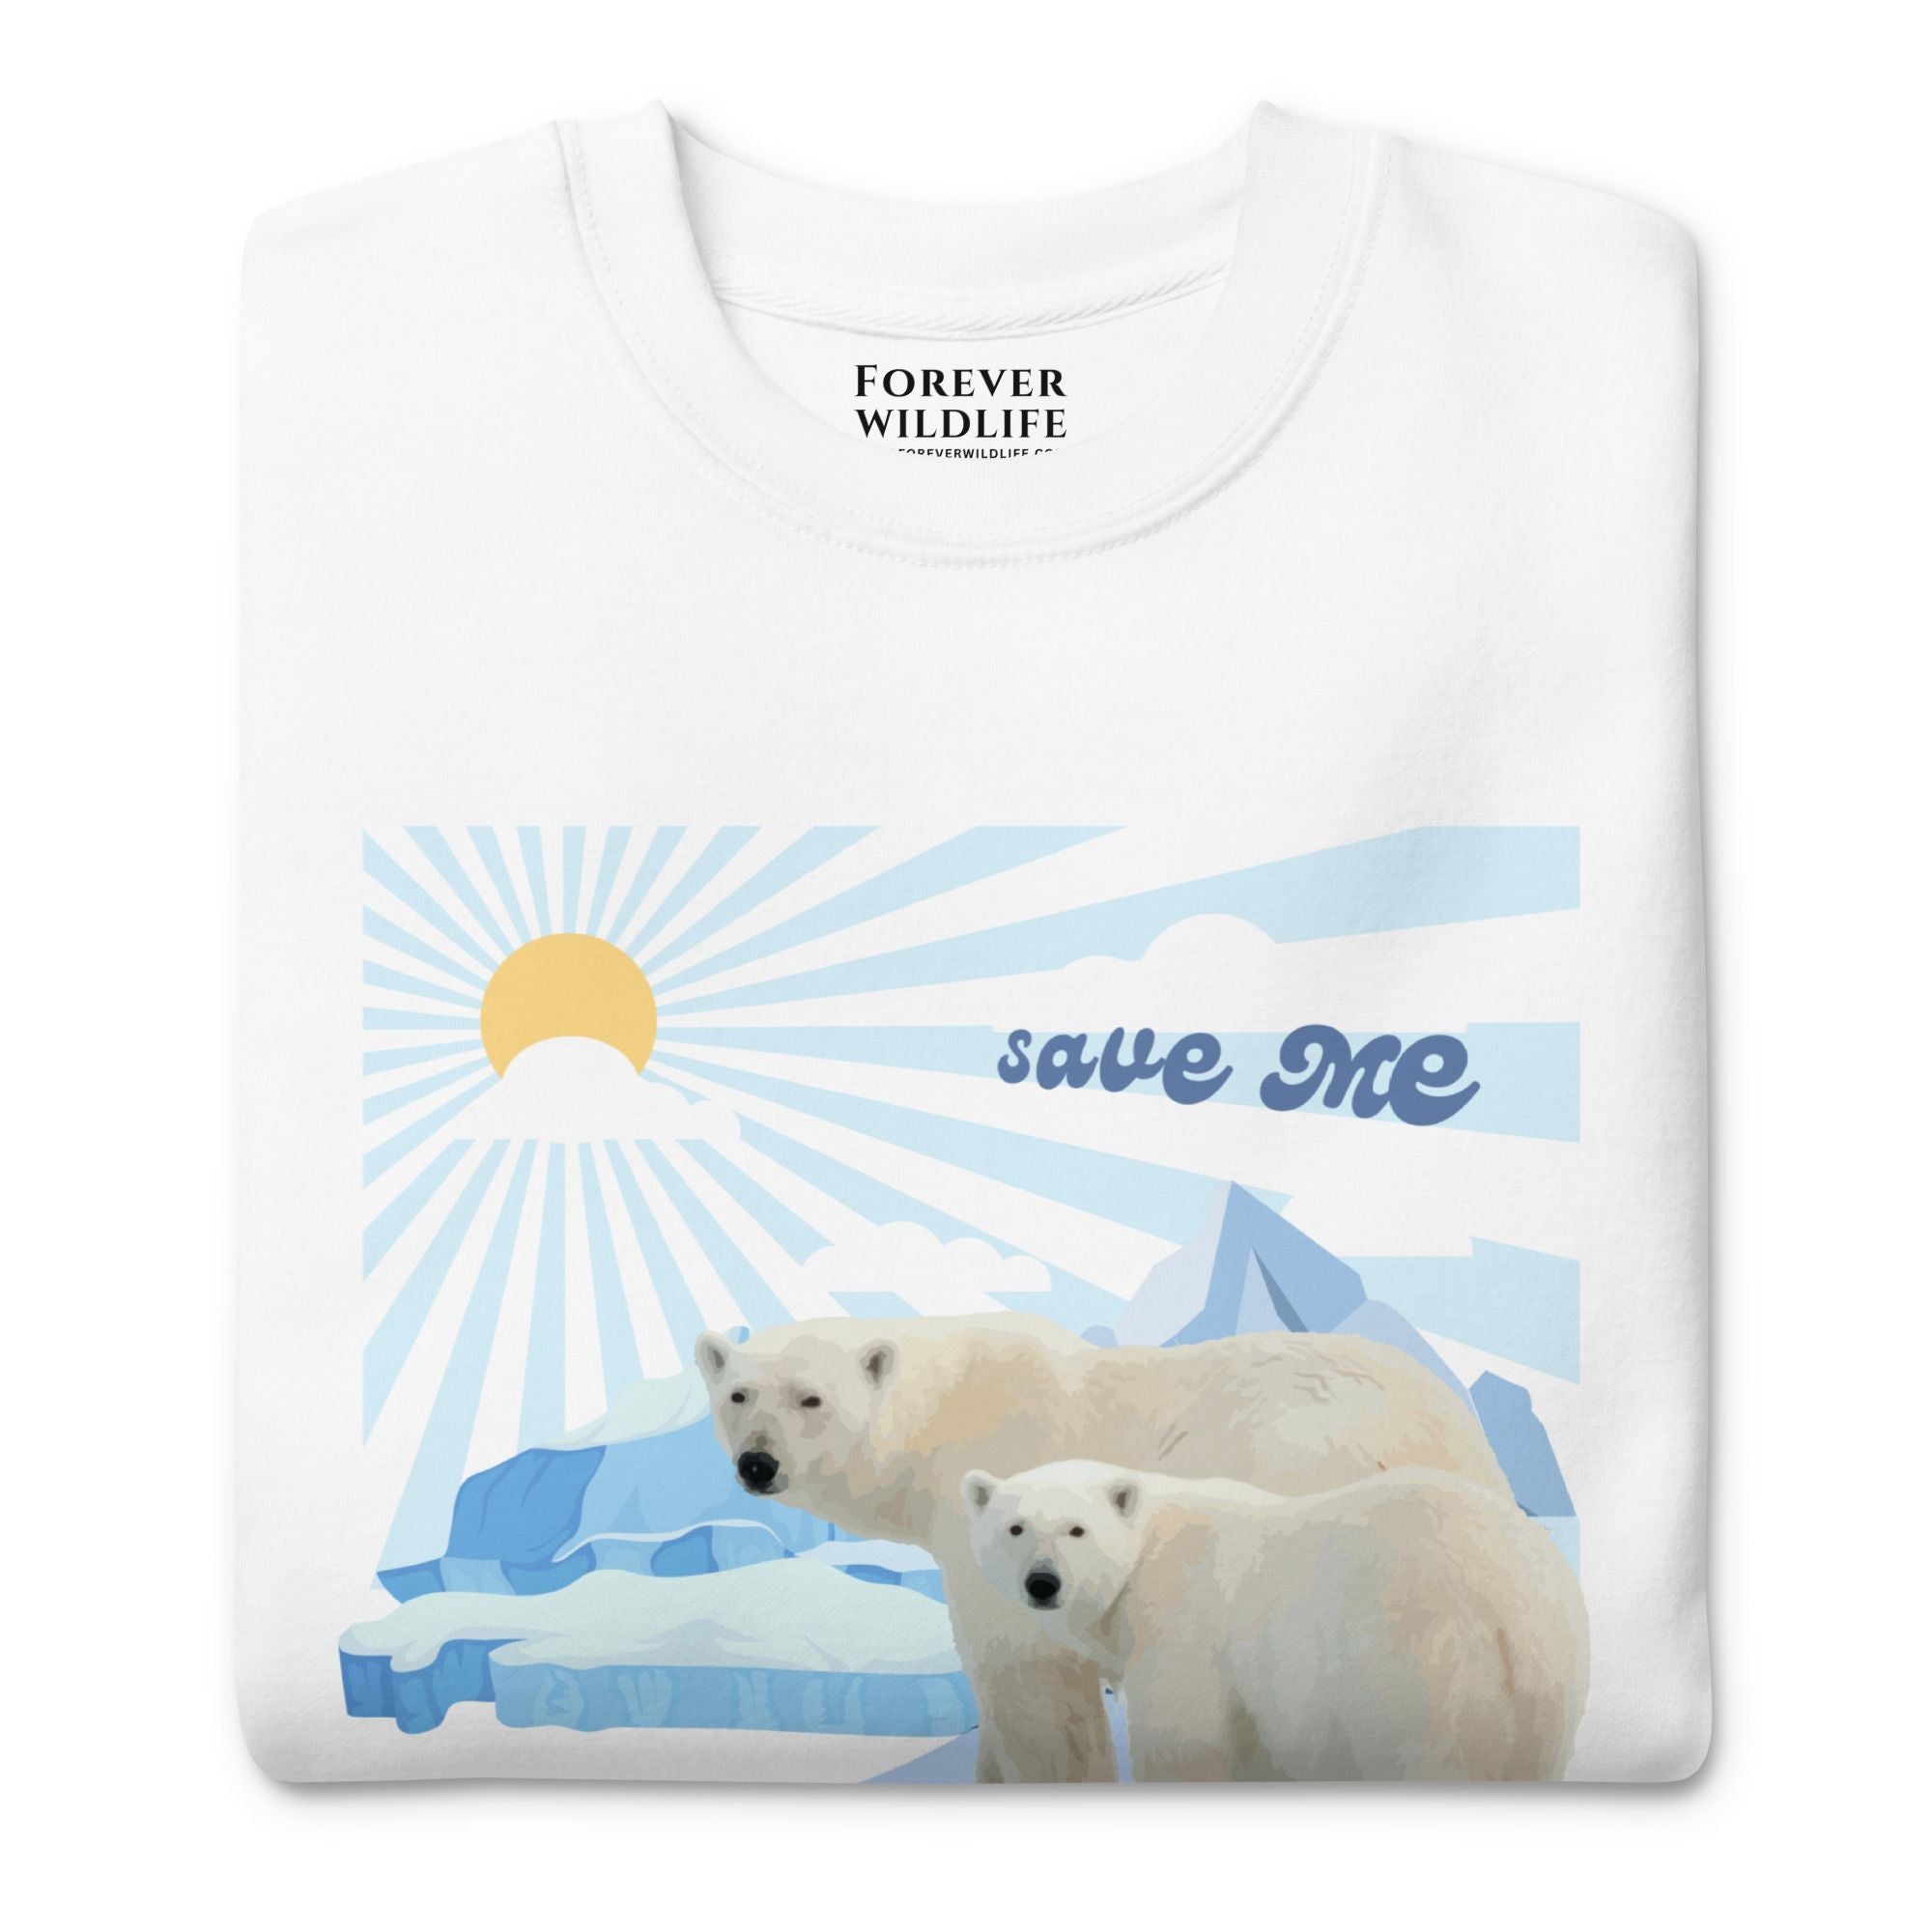 Polar Bears Sweatshirt in White-Premium Wildlife Animal Inspiration Sweatshirt Design with 'Save Me' text, part of Wildlife Sweatshirts & Clothing from Forever Wildlife.